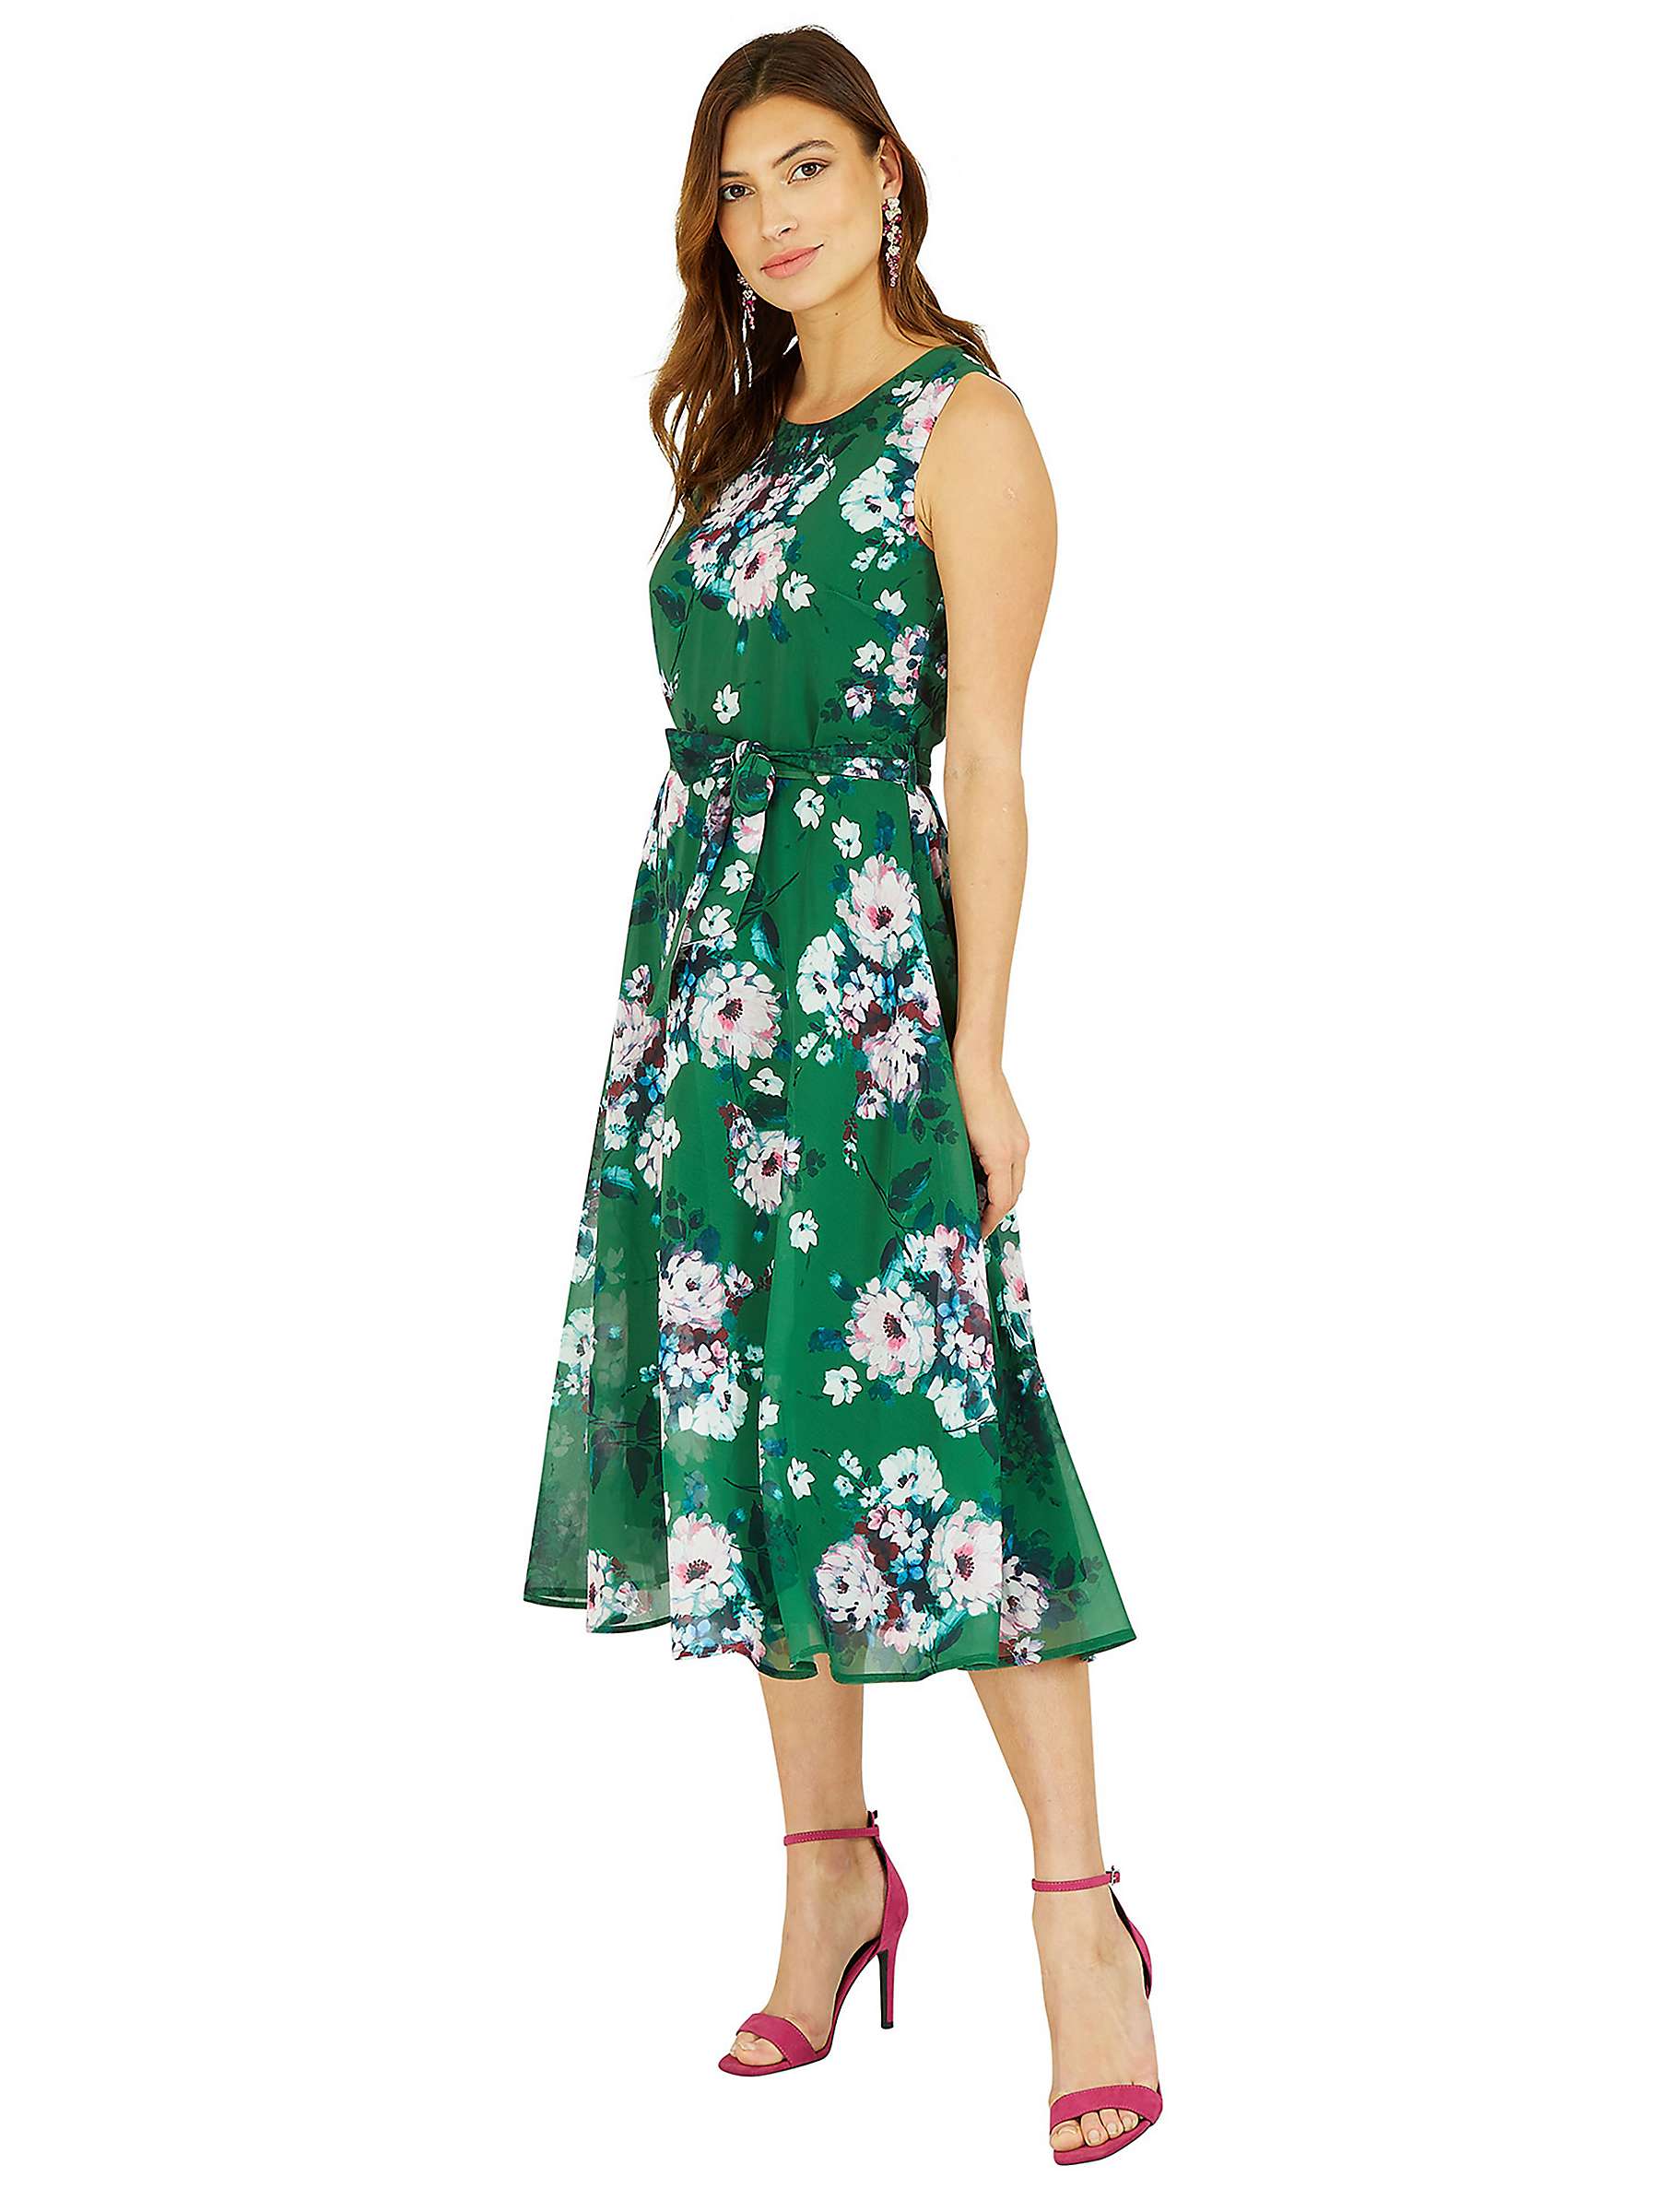 Yumi Watercolour Floral Print Skater Dress, Green at John Lewis & Partners